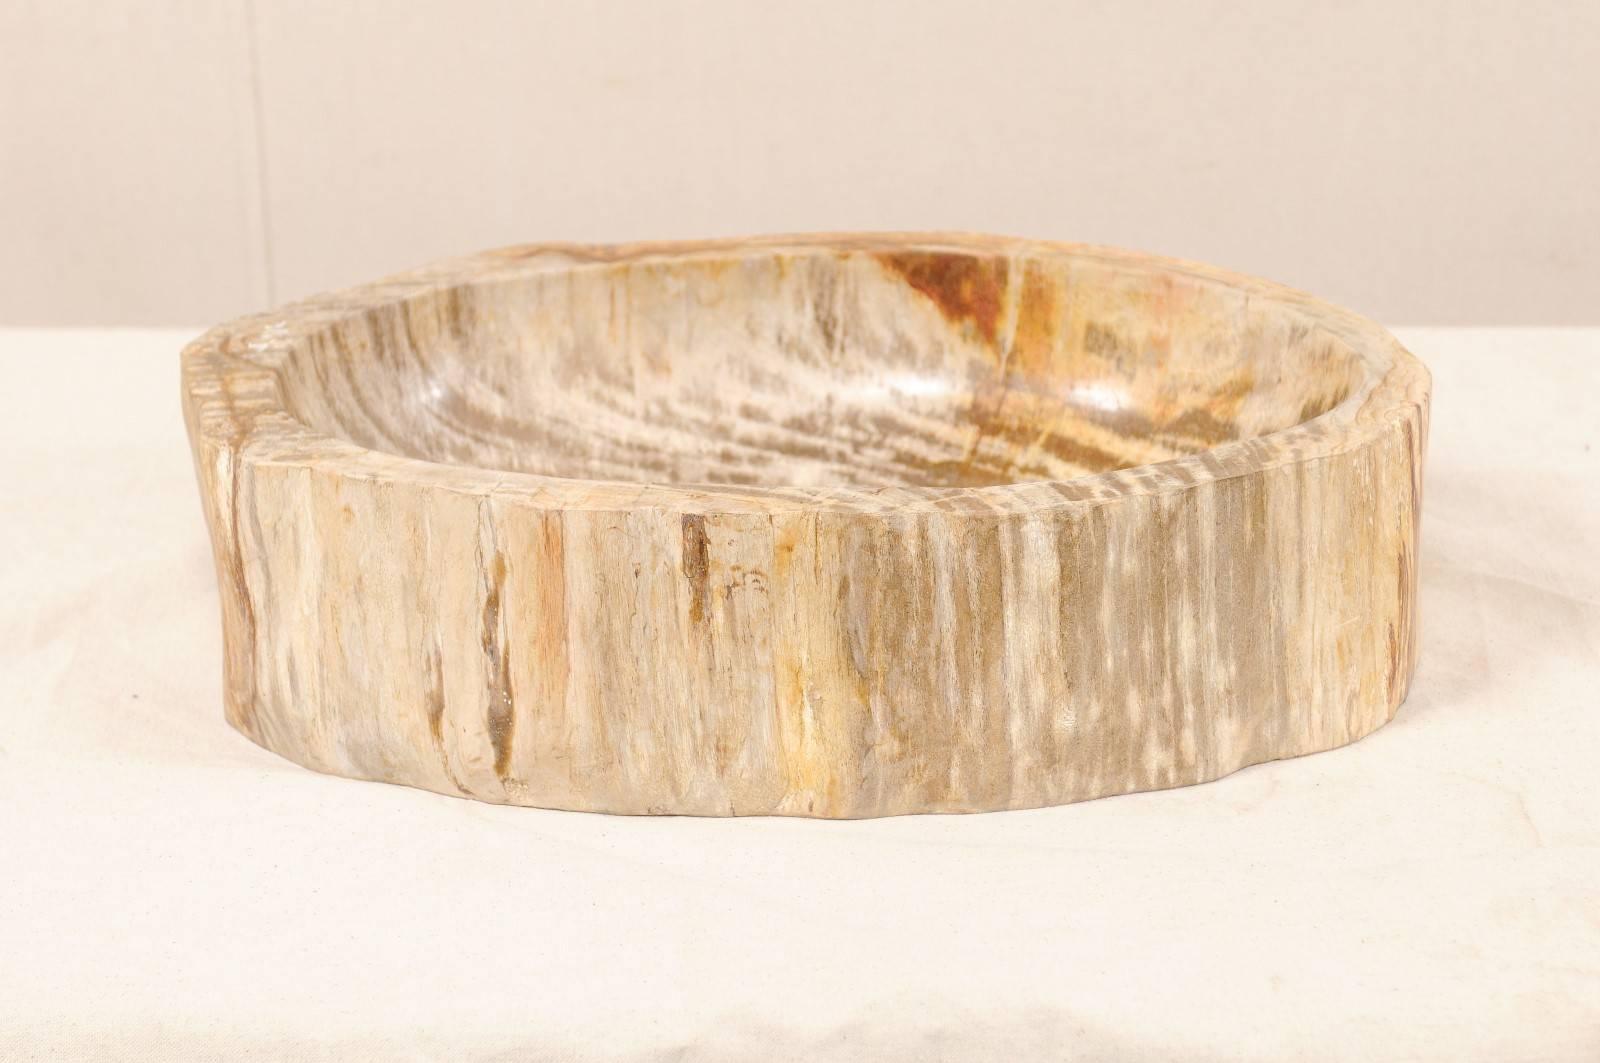 Carved A Petrified Wood Live-Edge Oval-Shaped Sink w/Polished Basin in Warm Tones